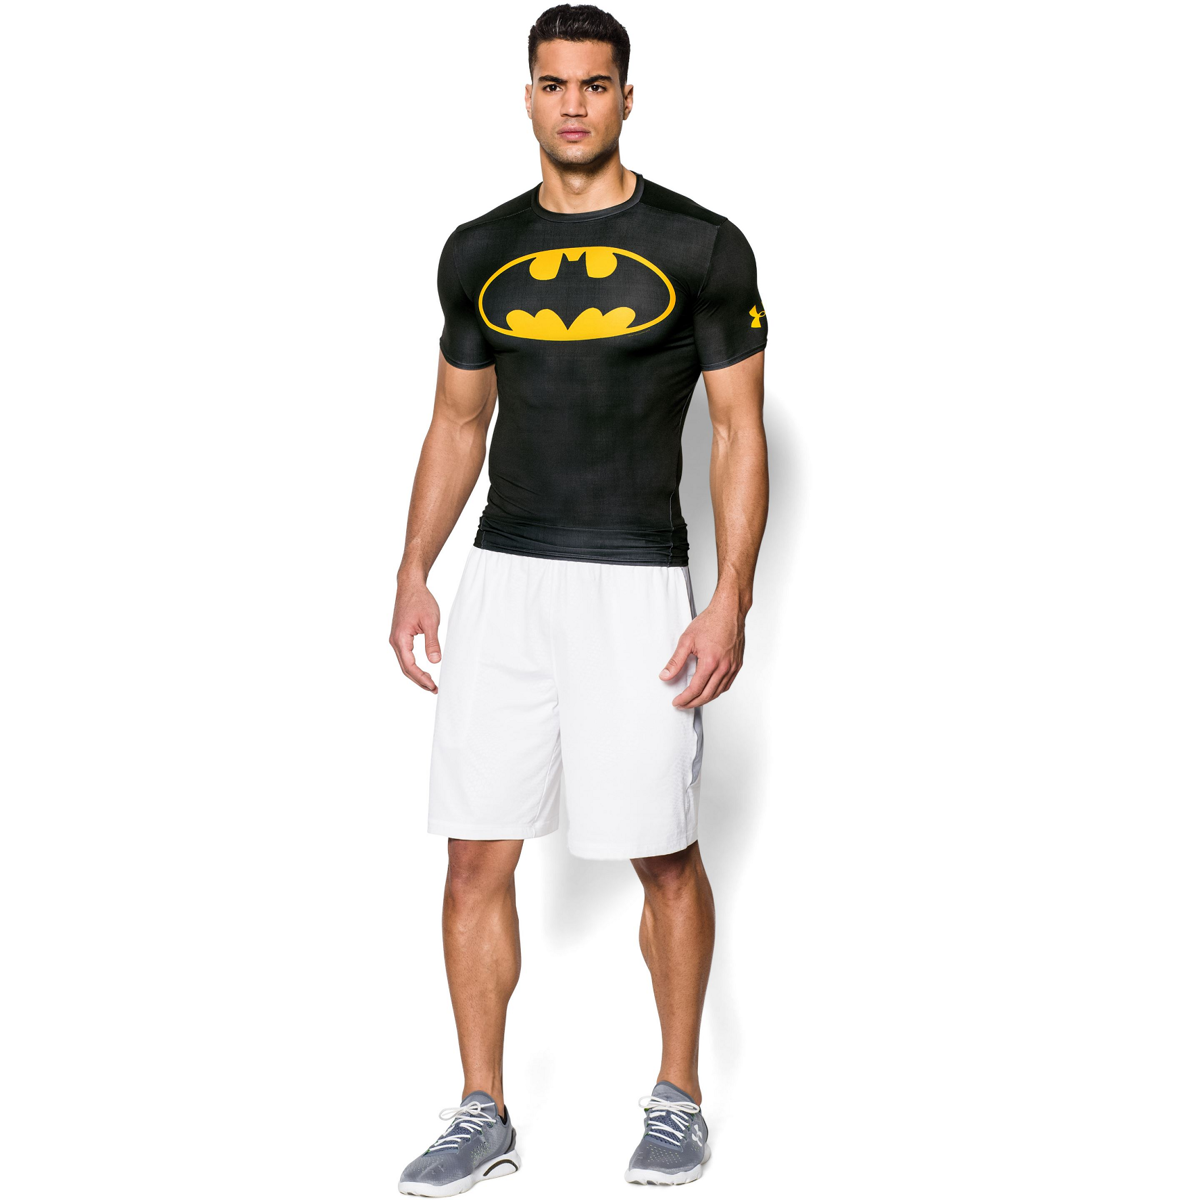 Under Armour Alter Ego Batman Compression Shirt - 1244399-006 ...